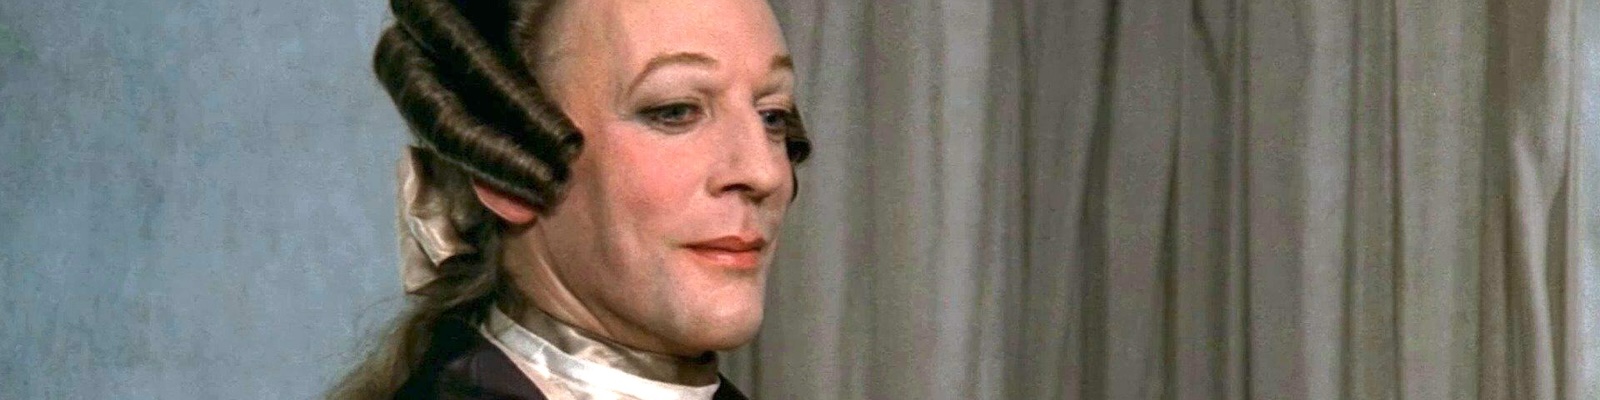 Donald Sutherland in period costume and makeup in Fellini's Casanova